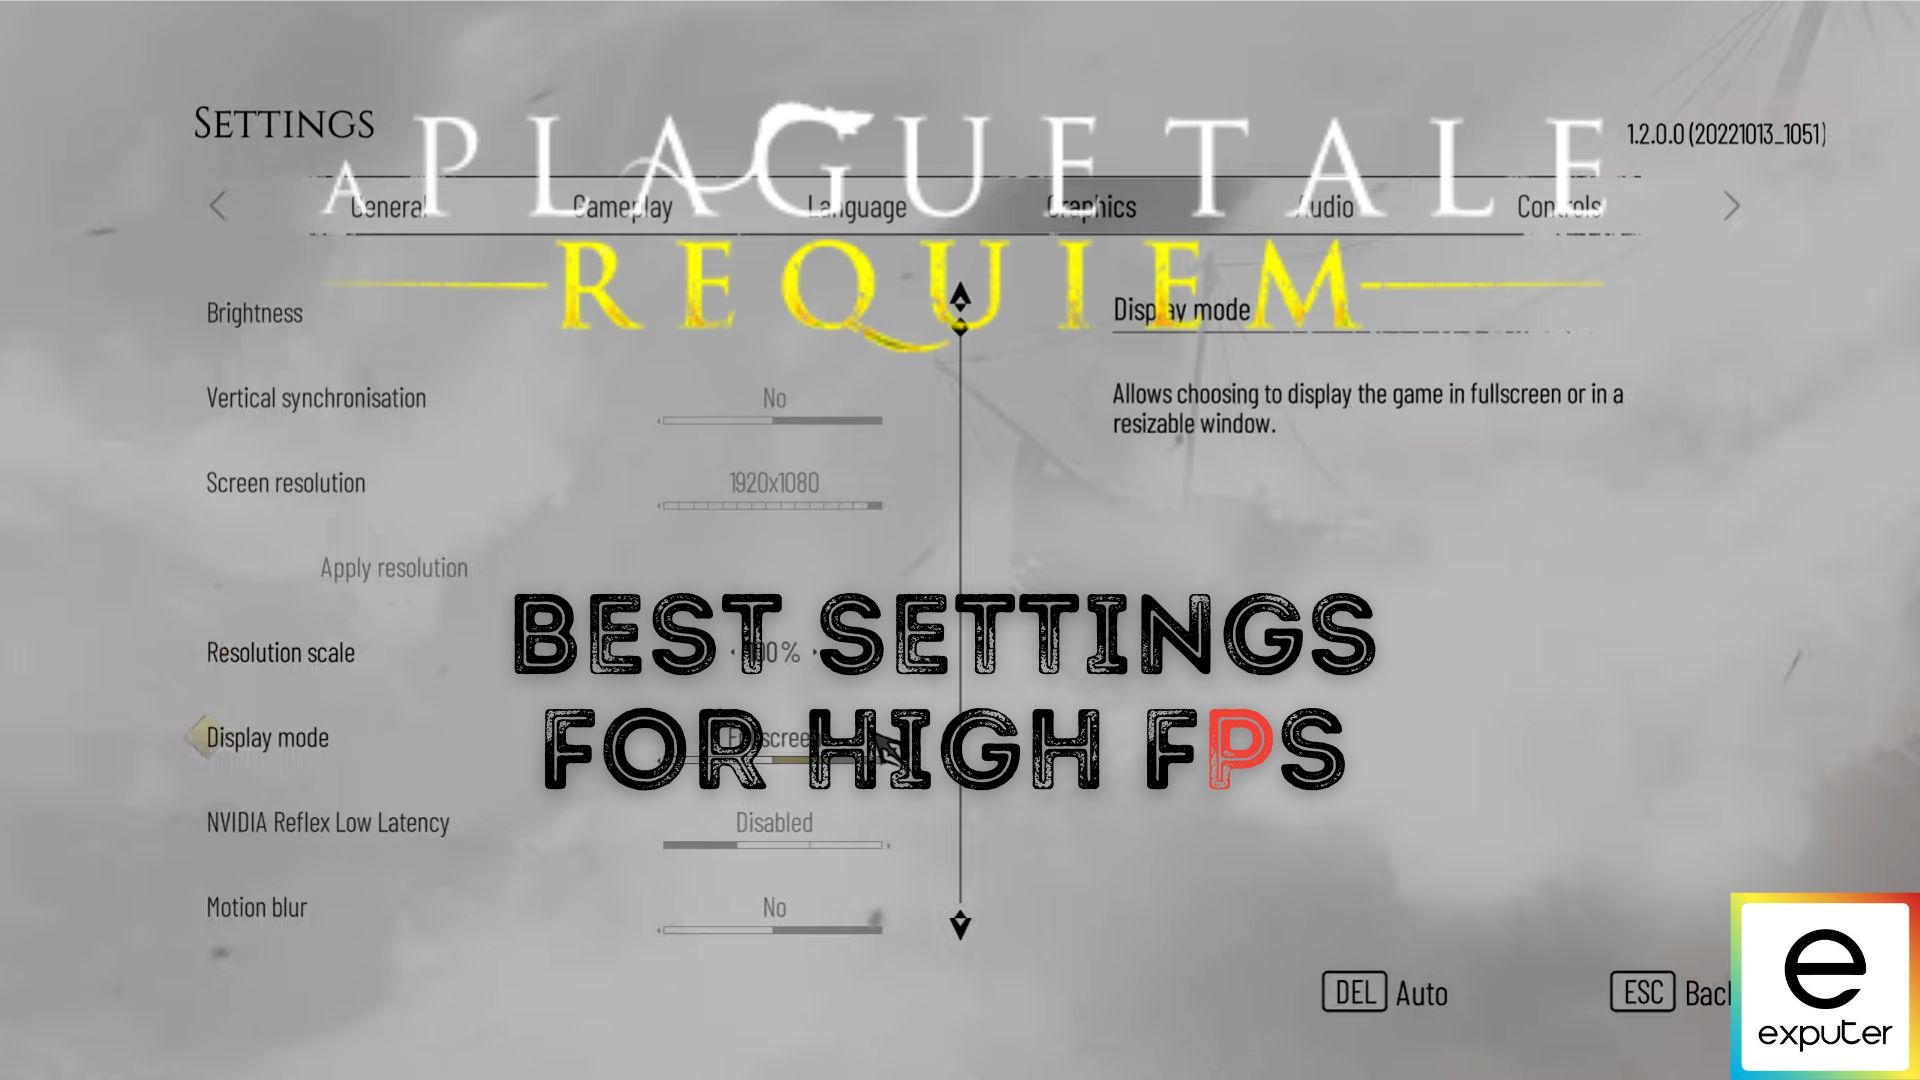 A Plague Tale: Requiem now has a 60fps option - so what's the catch?